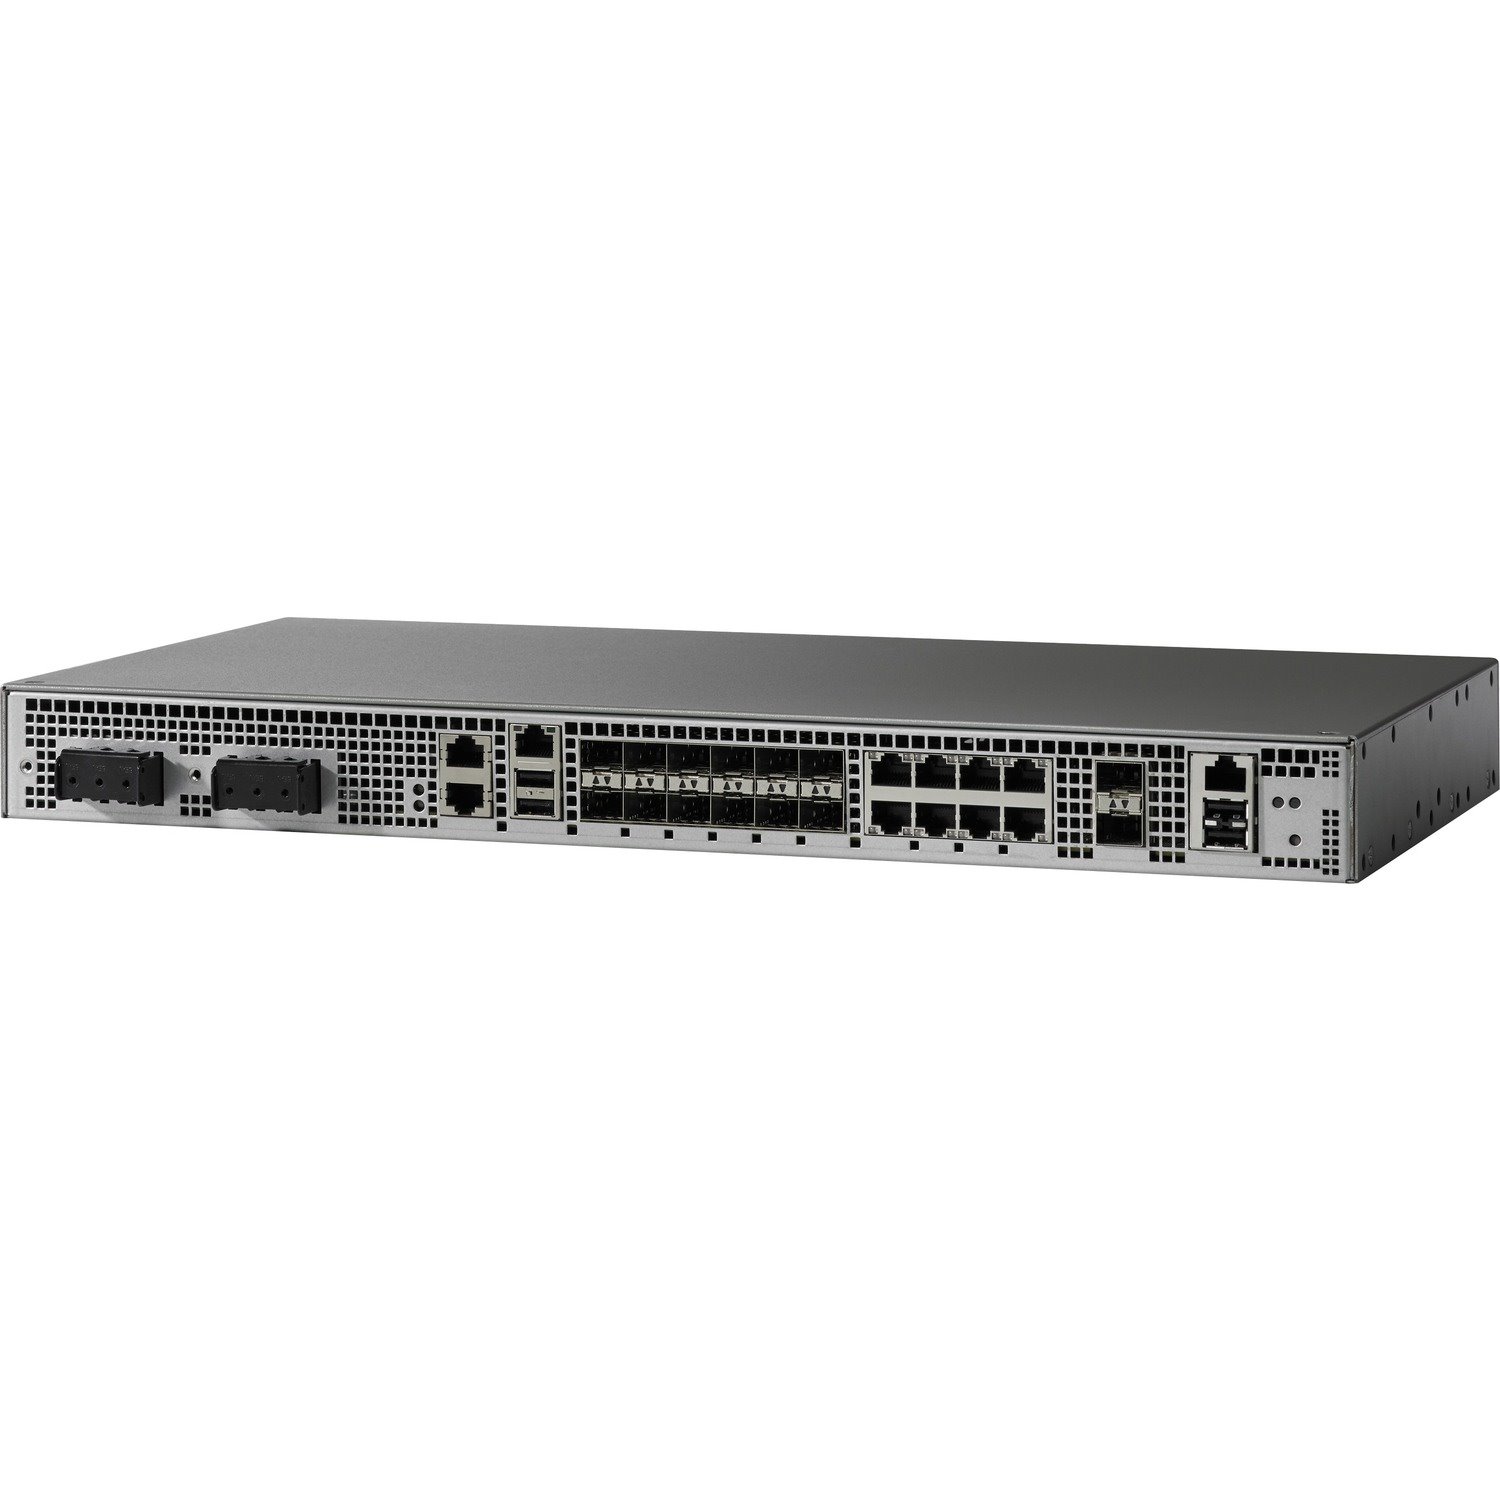 Cisco ASR 920 ASR-920-4SZ-A Router